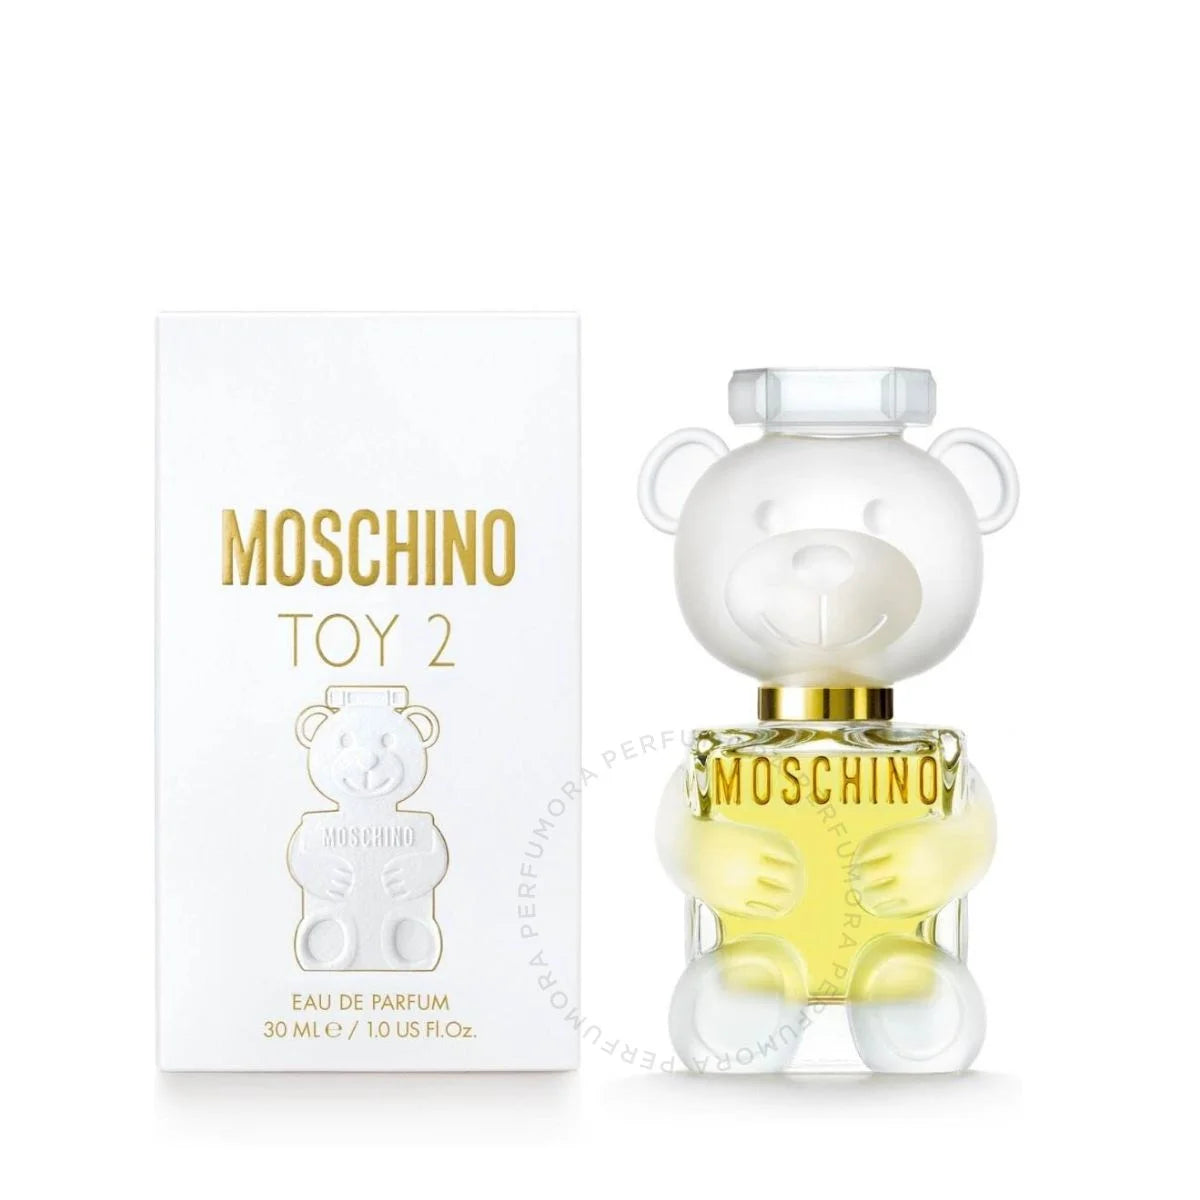 Moschino Toy 2 EDP Spray For Women